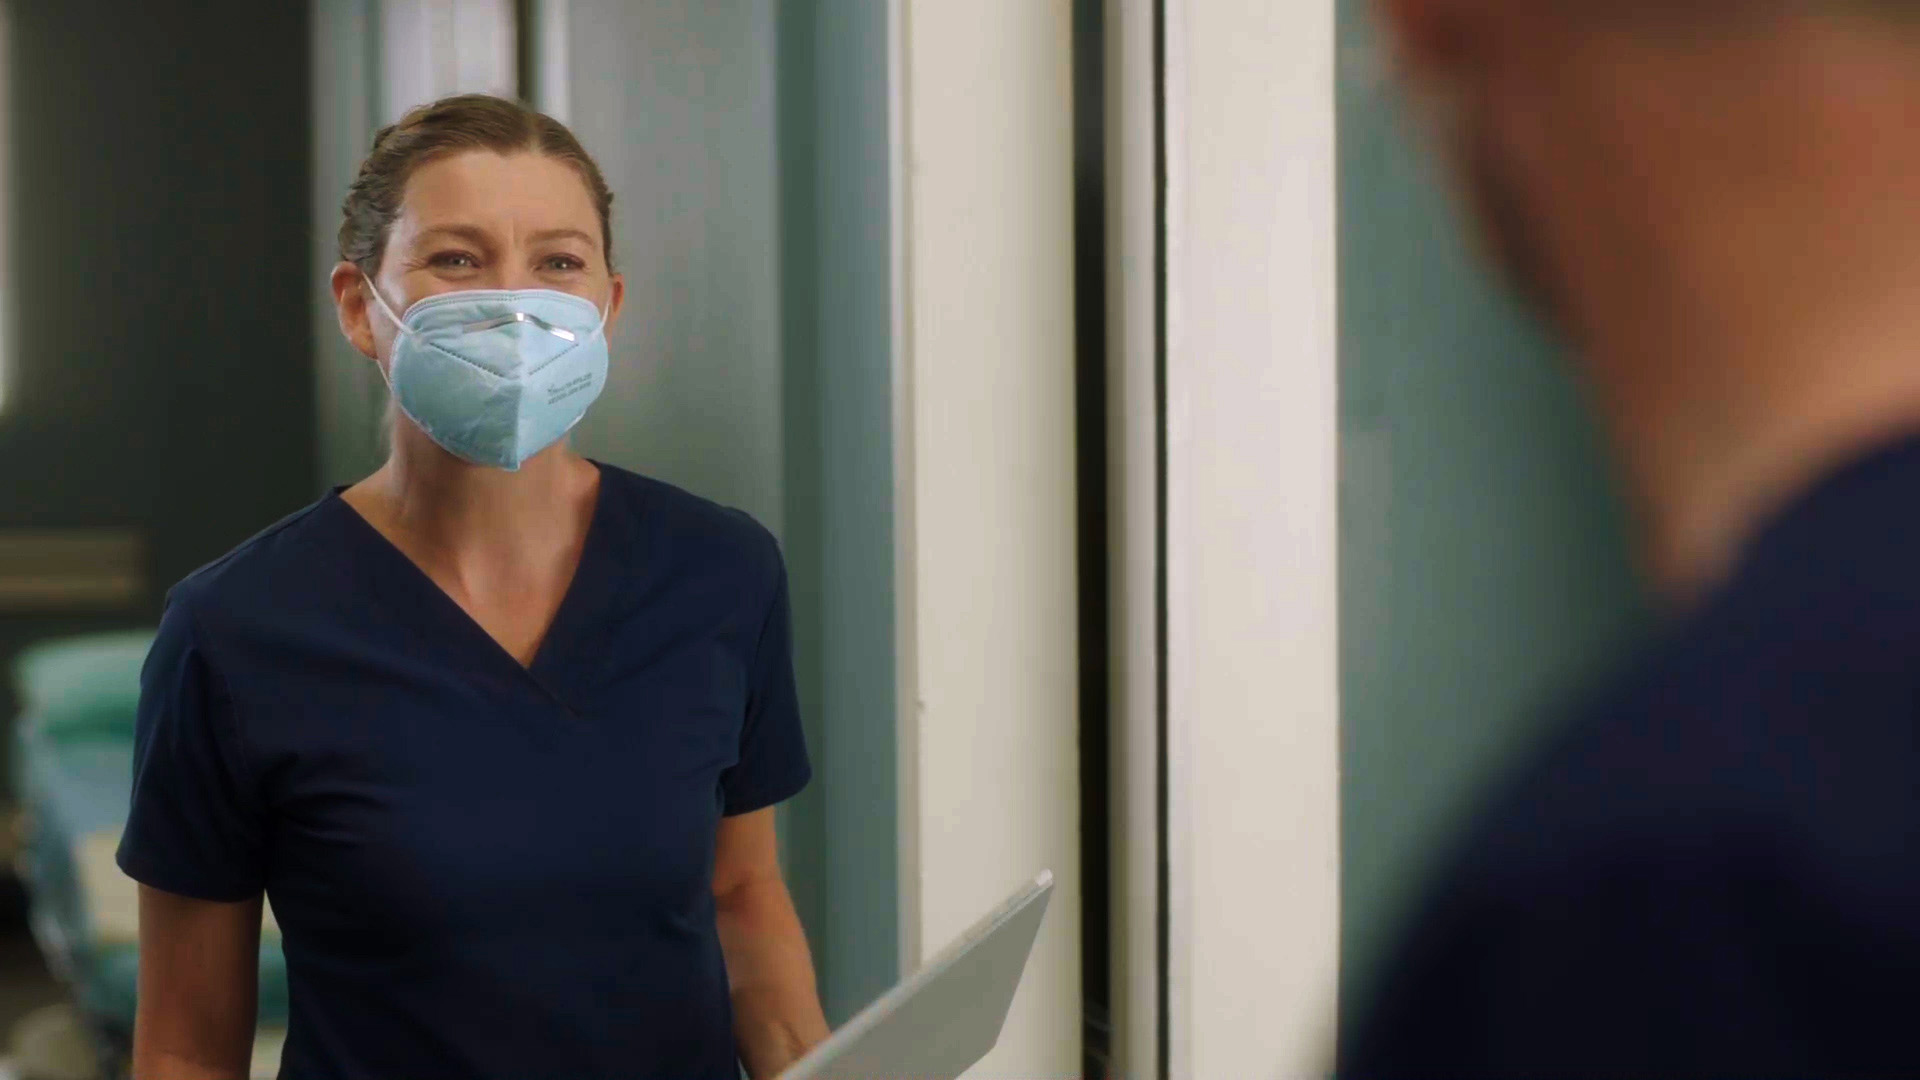 Ellen Pompeo as Meredith Grey on the 'Grey's Anatomy' Season 17 premiere in 2020 wearing a mask